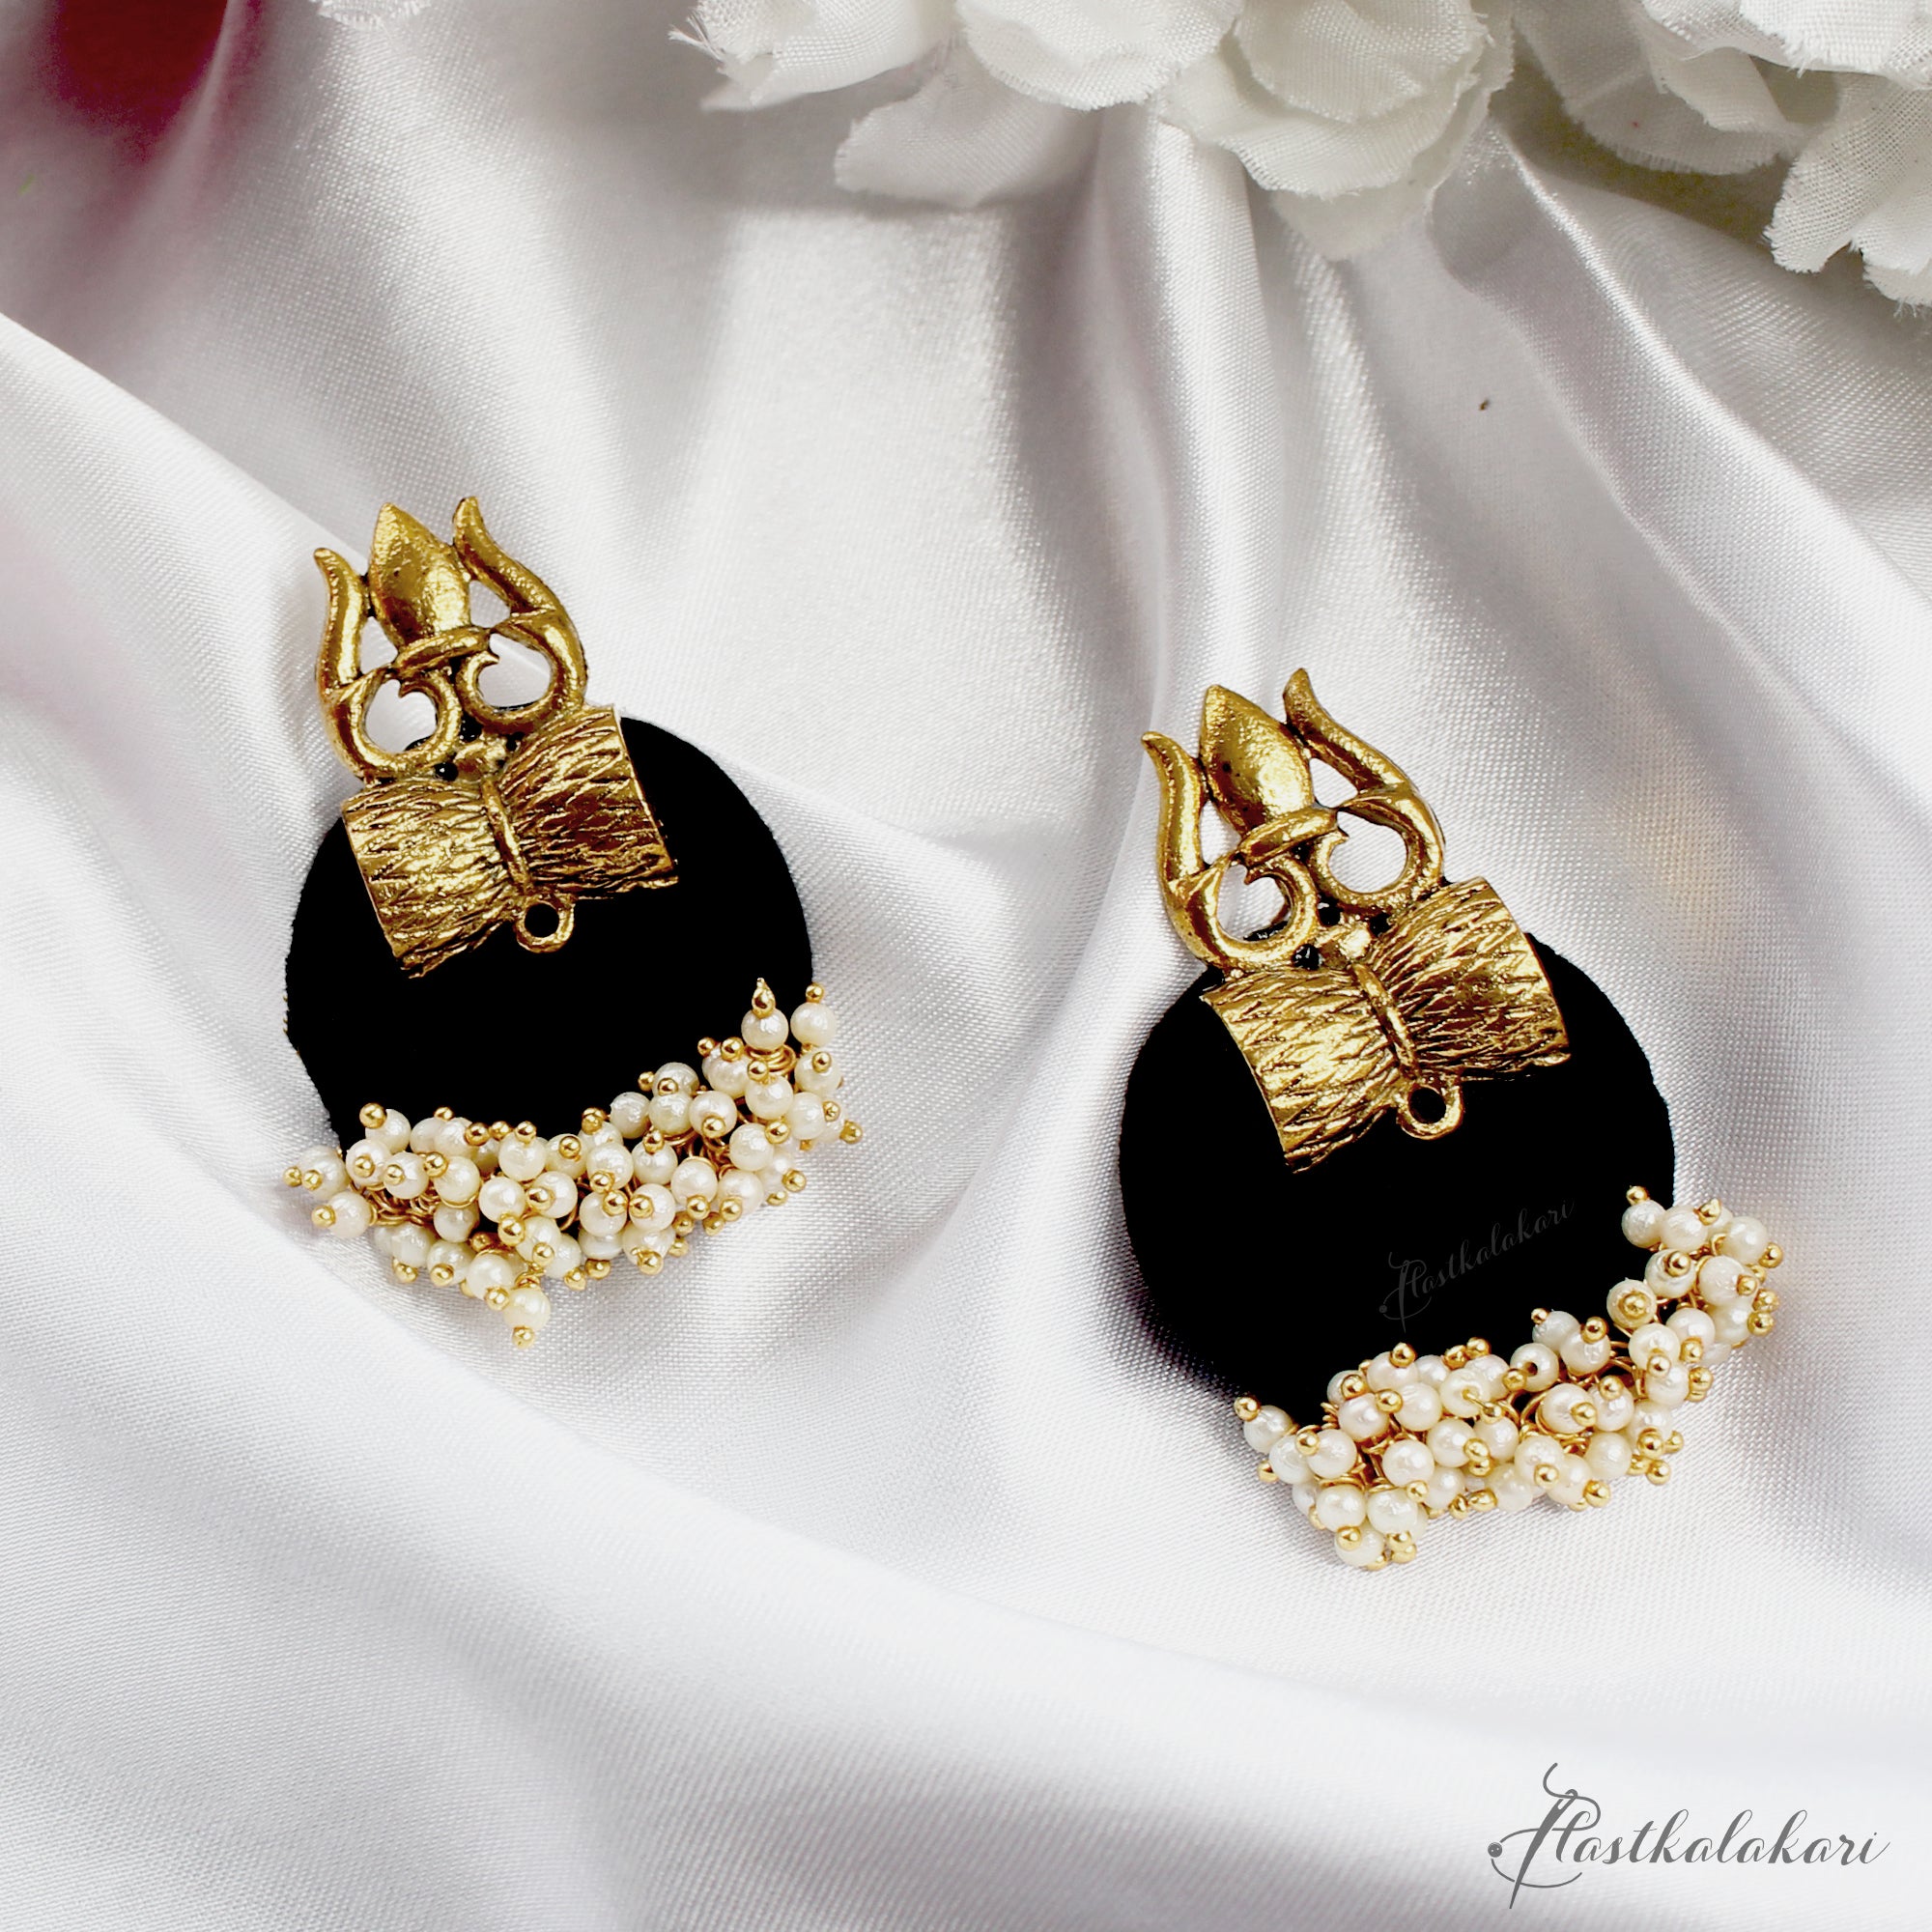 Hastkalakari Handmade Golden Trishul Design Black Fabric Earrings With Pearls For Women